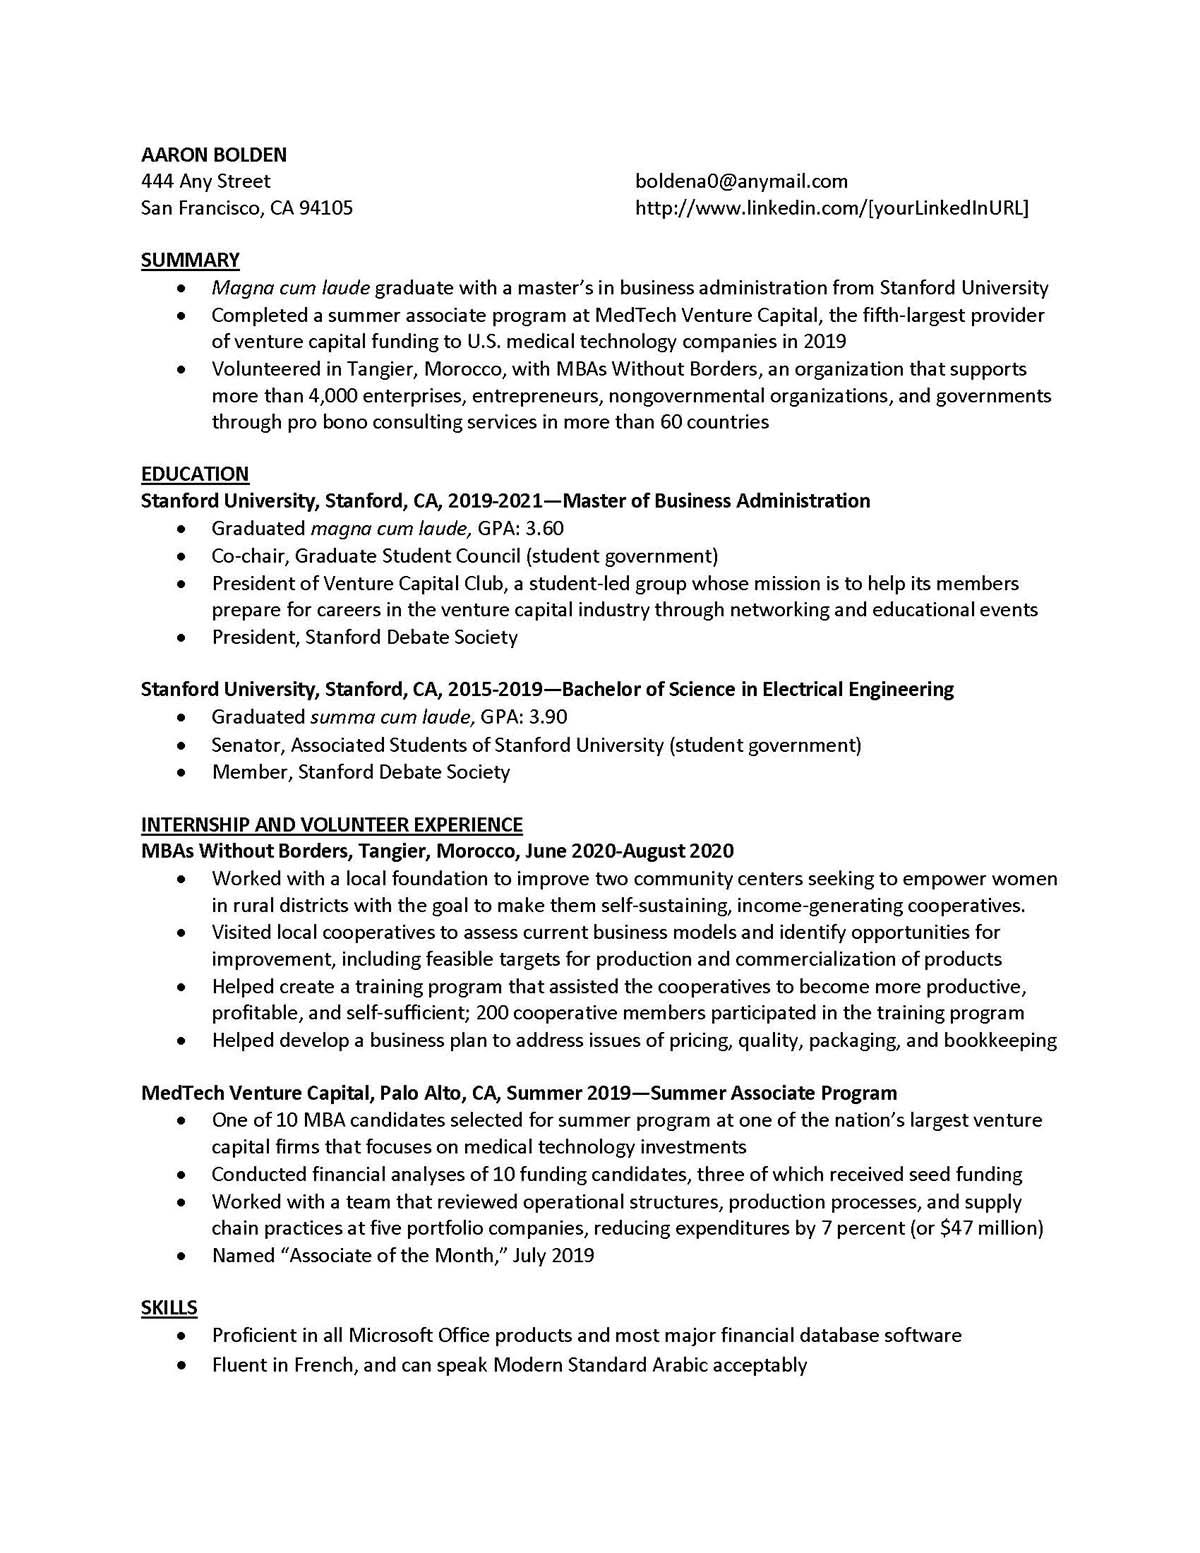 Sample resume: Venture Capital, Entry Level, Combination